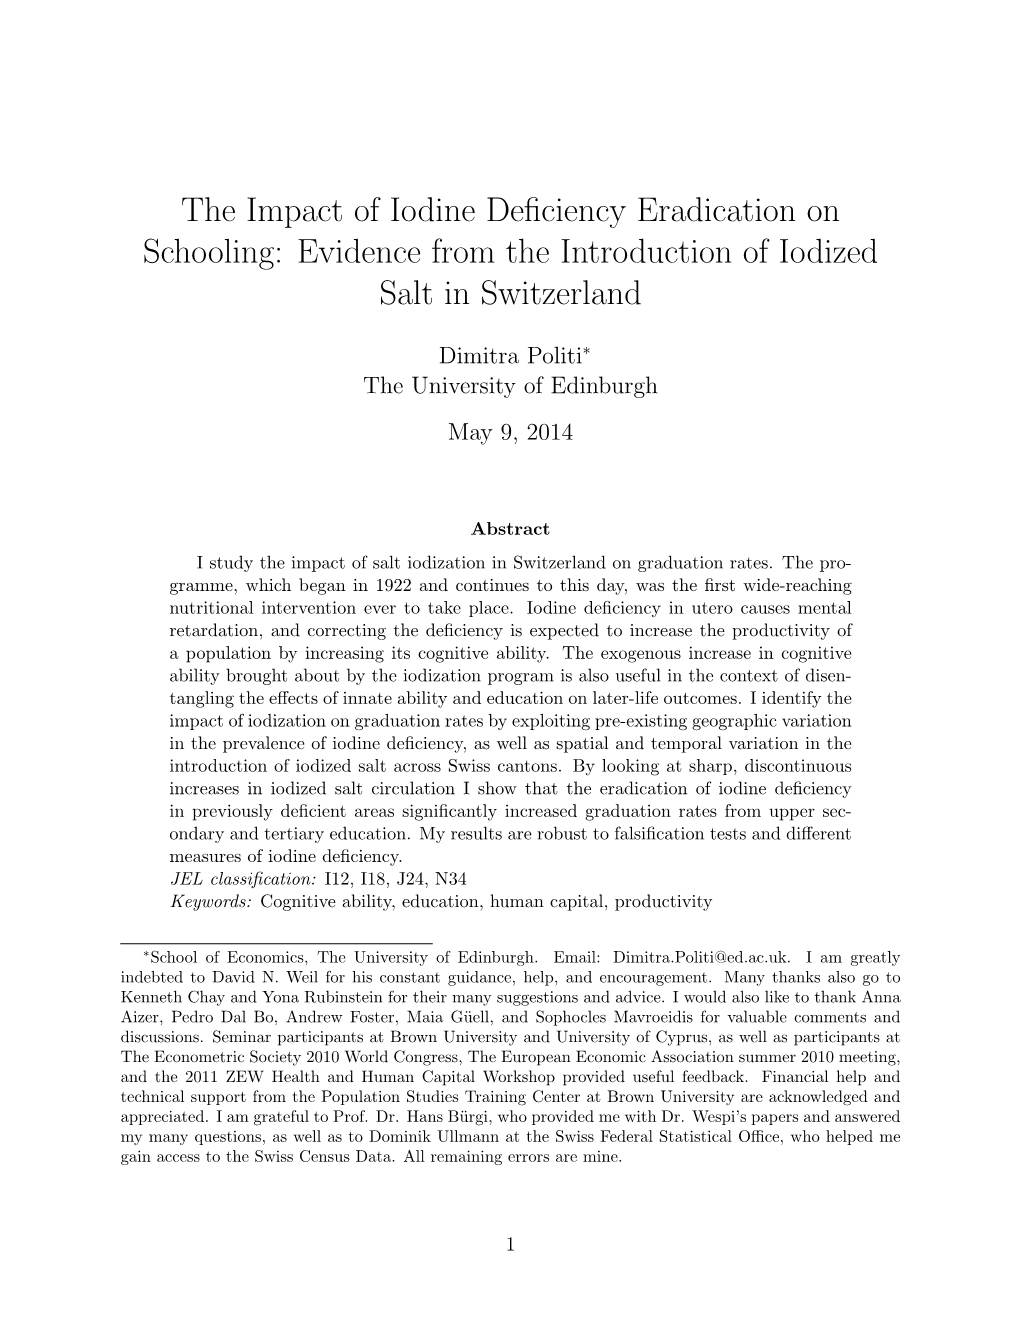 The Impact of Iodine Deficiency Eradication on Schooling: Evidence